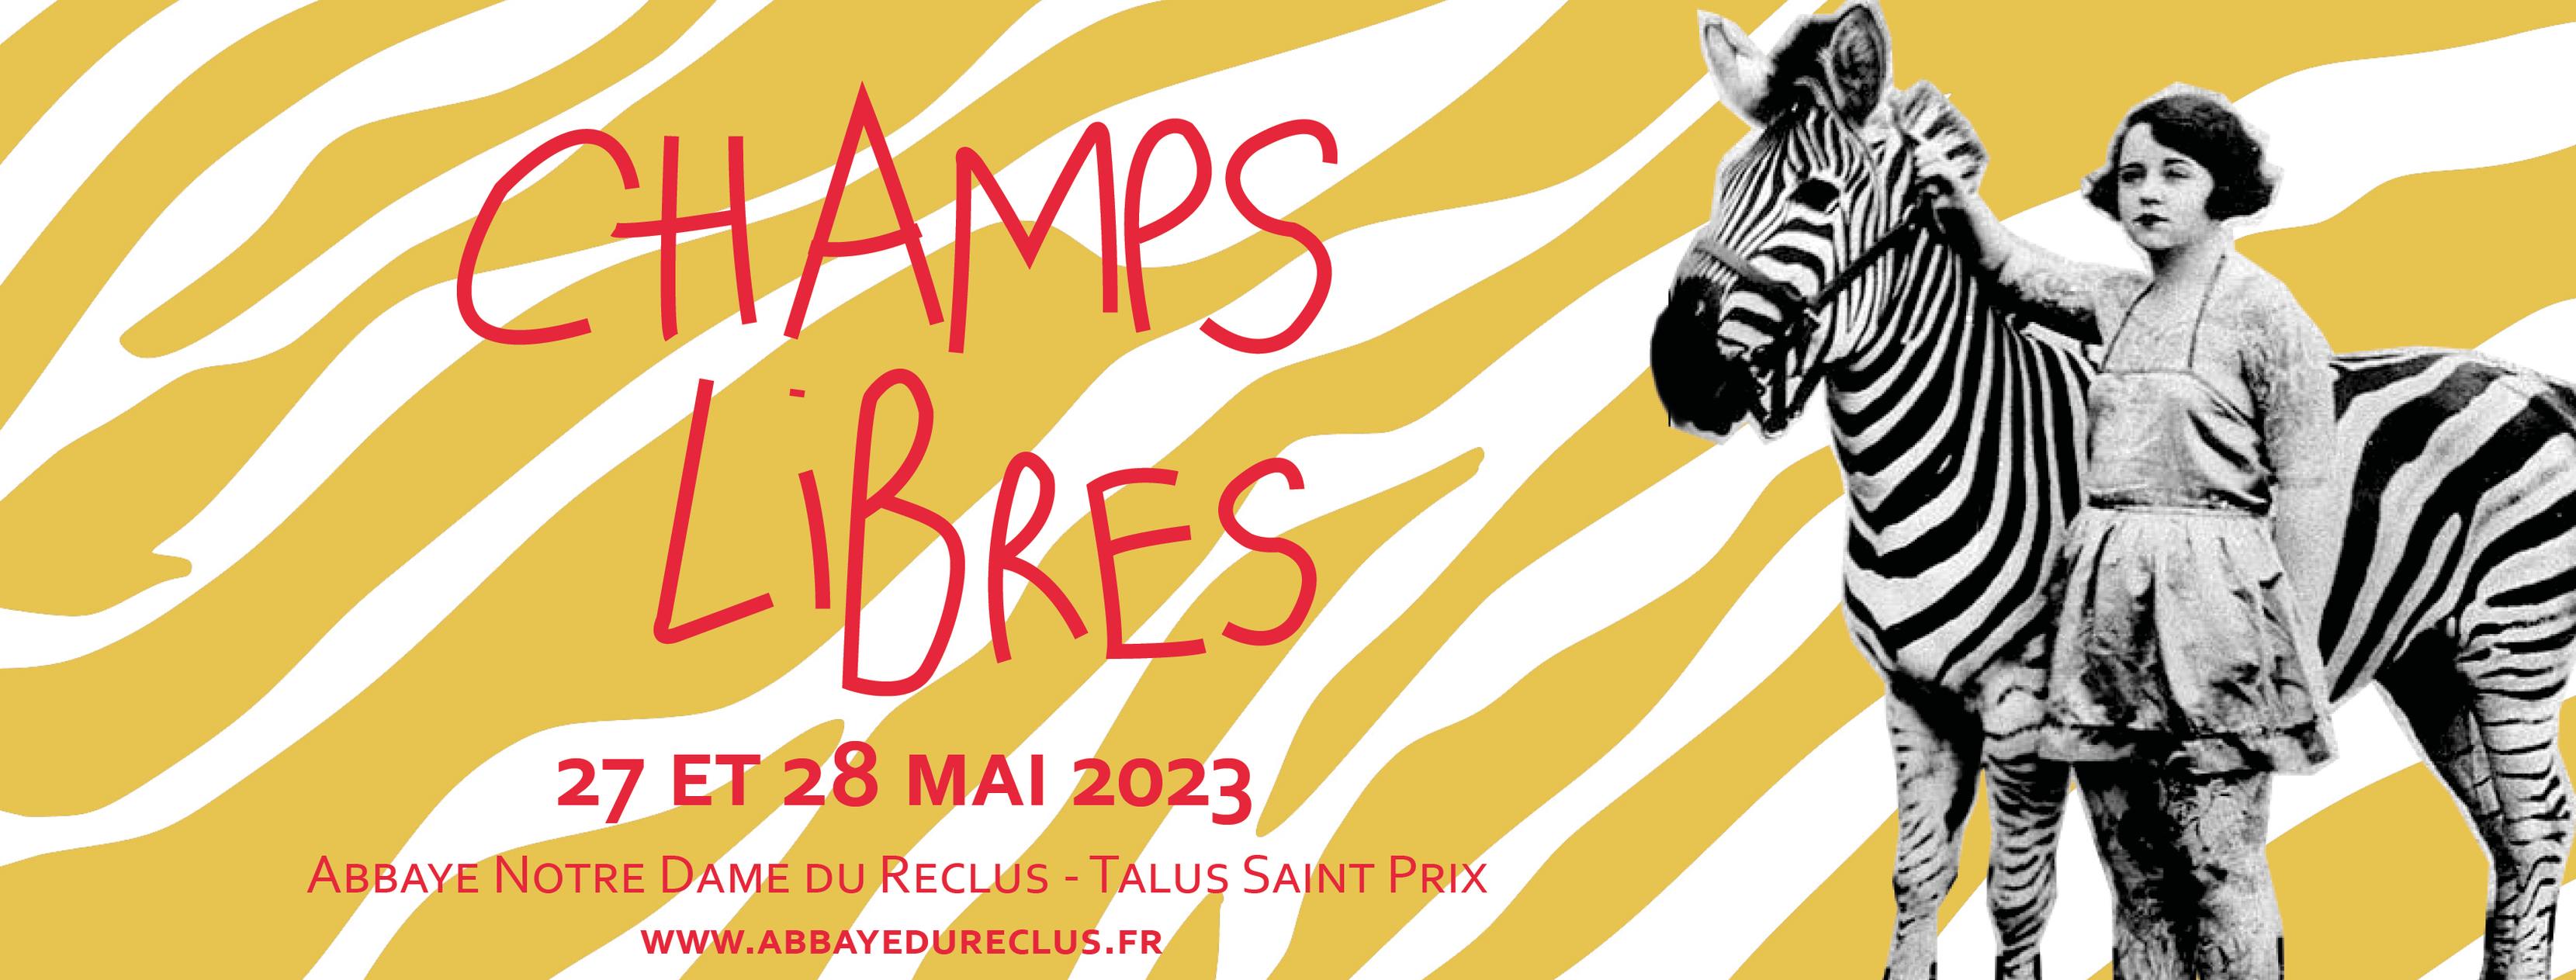 Festival Champs Libres 2023